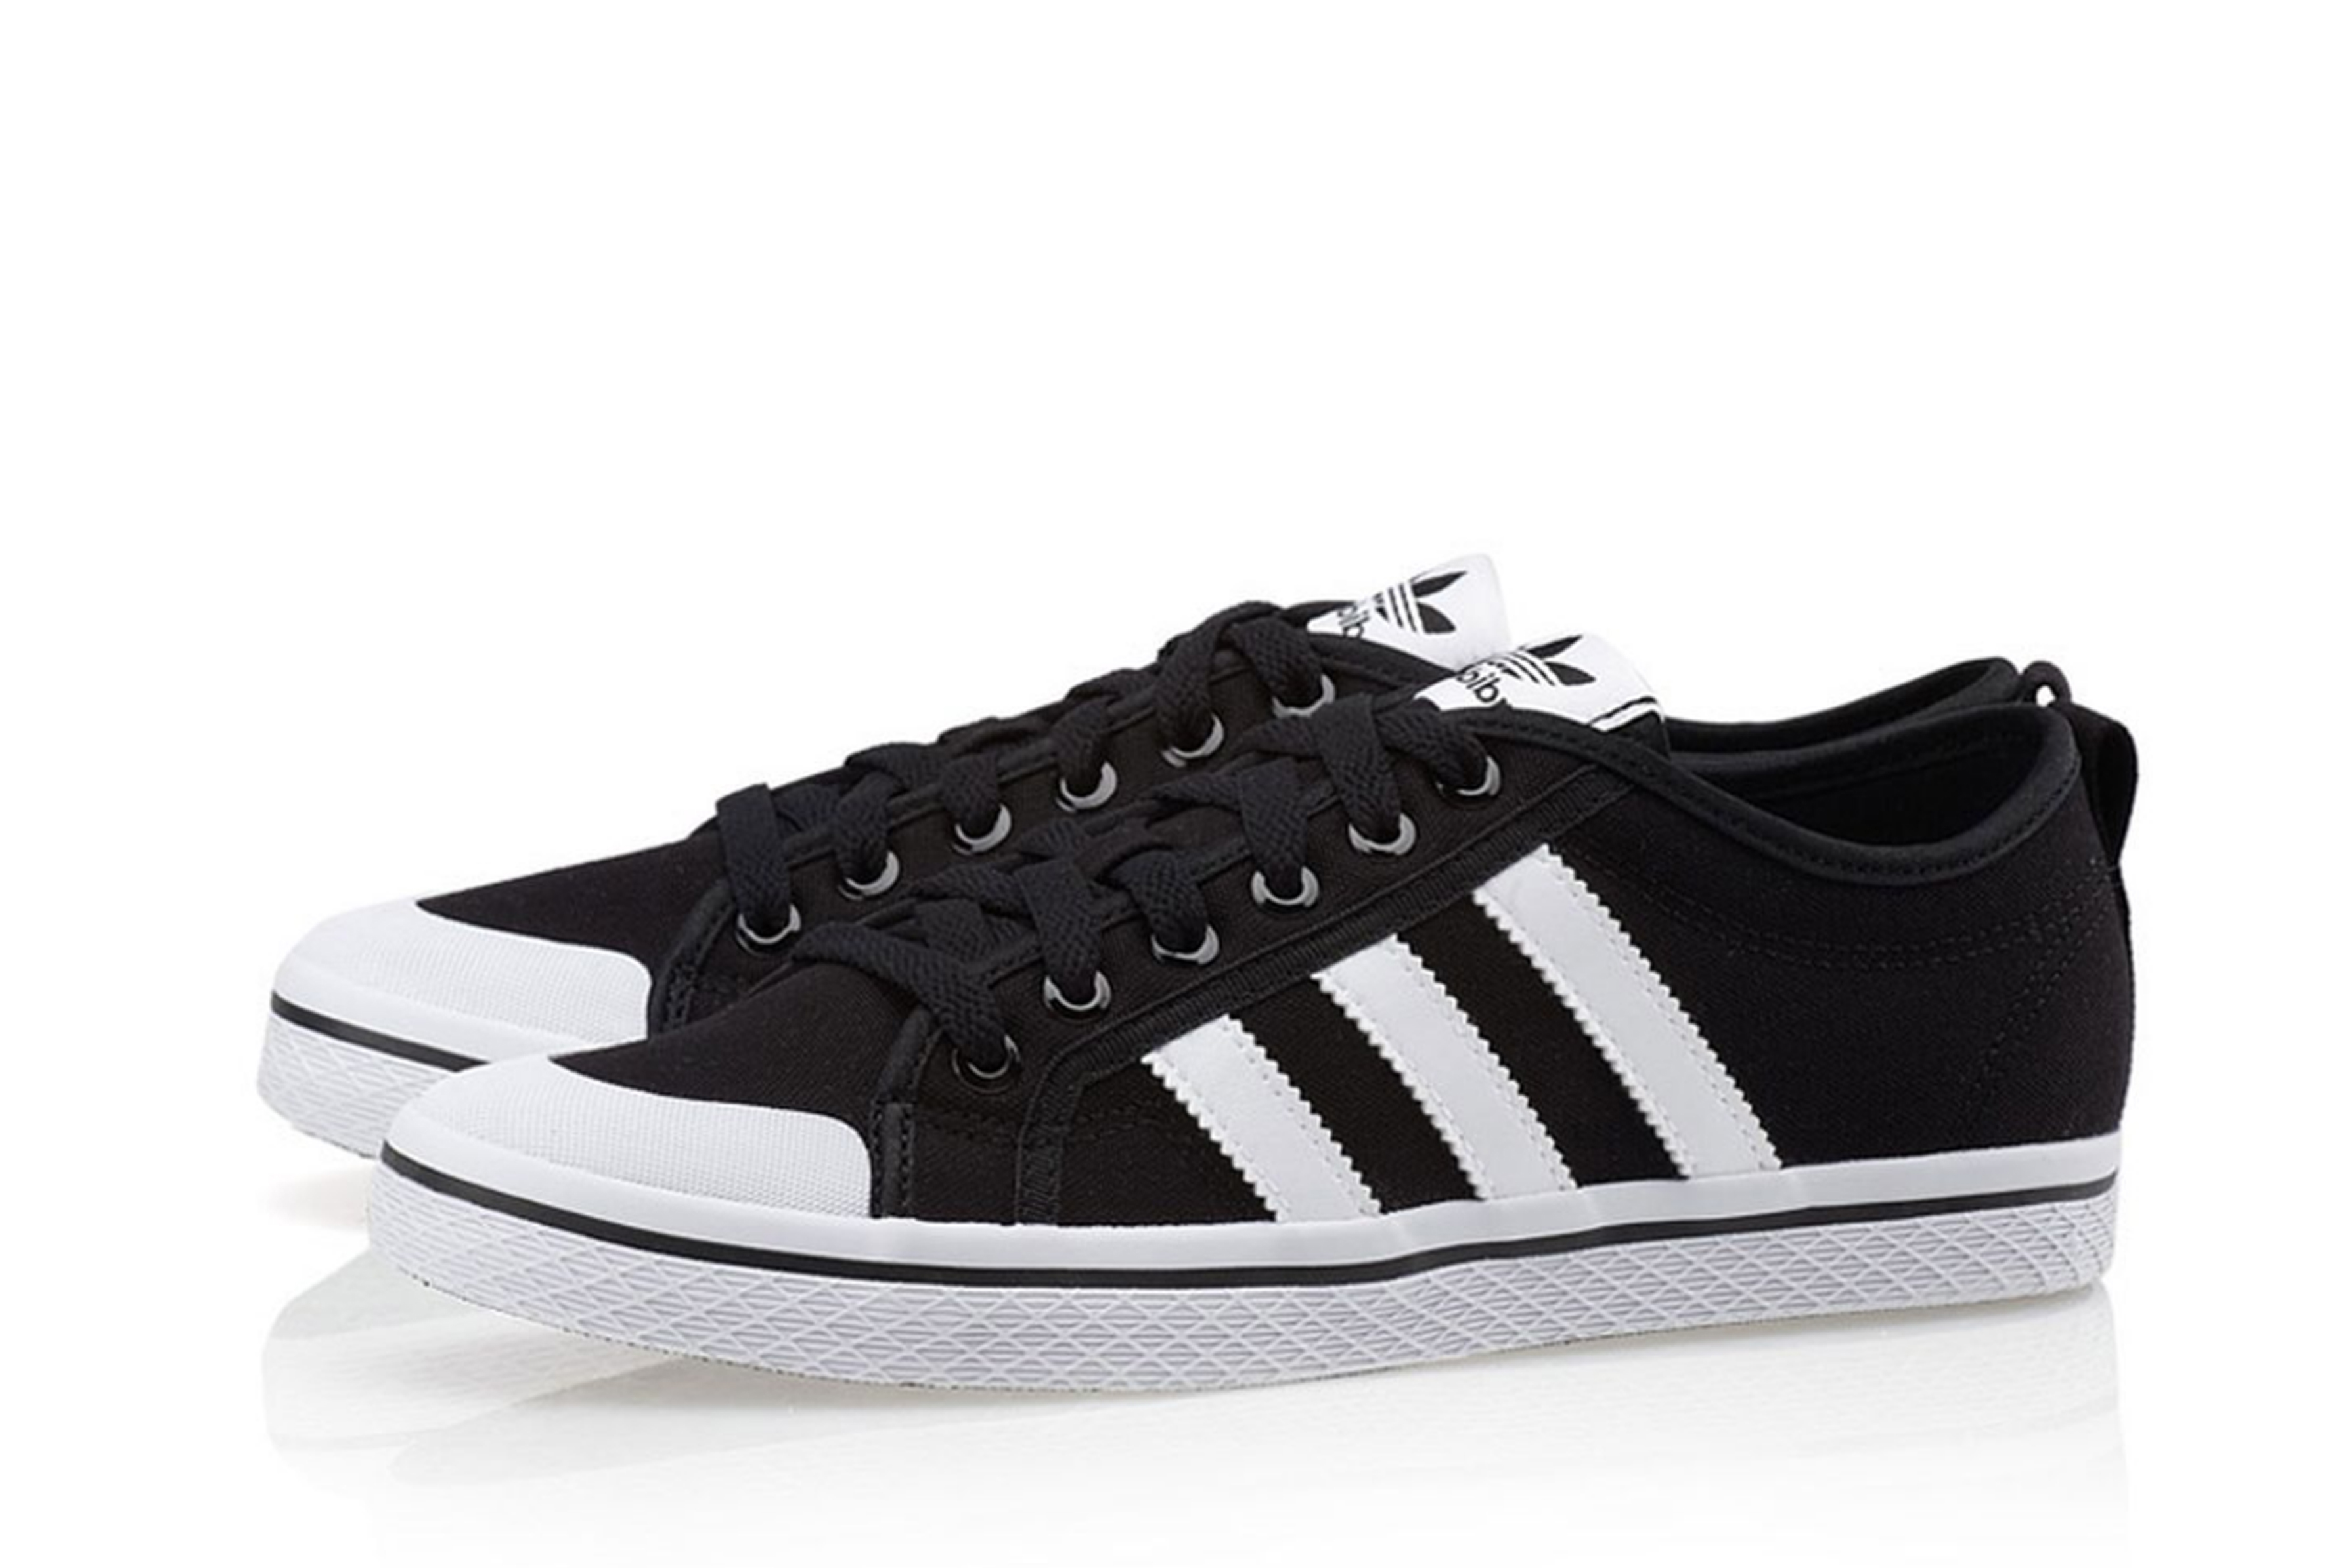 adidas Stripes Low Black/White/Black